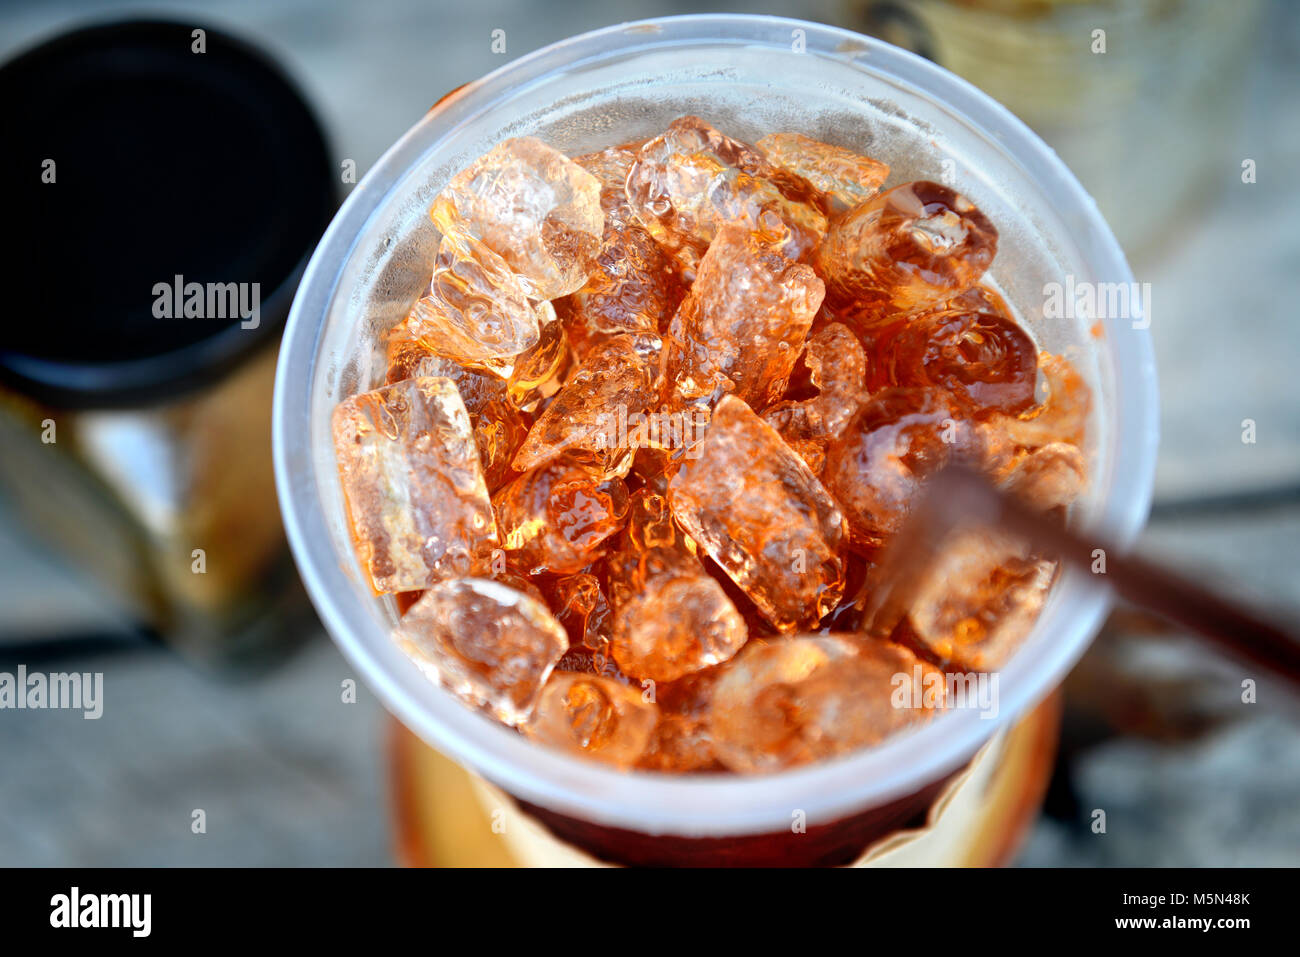 Fresh ice tea in plastic cup Stock Photo - Alamy